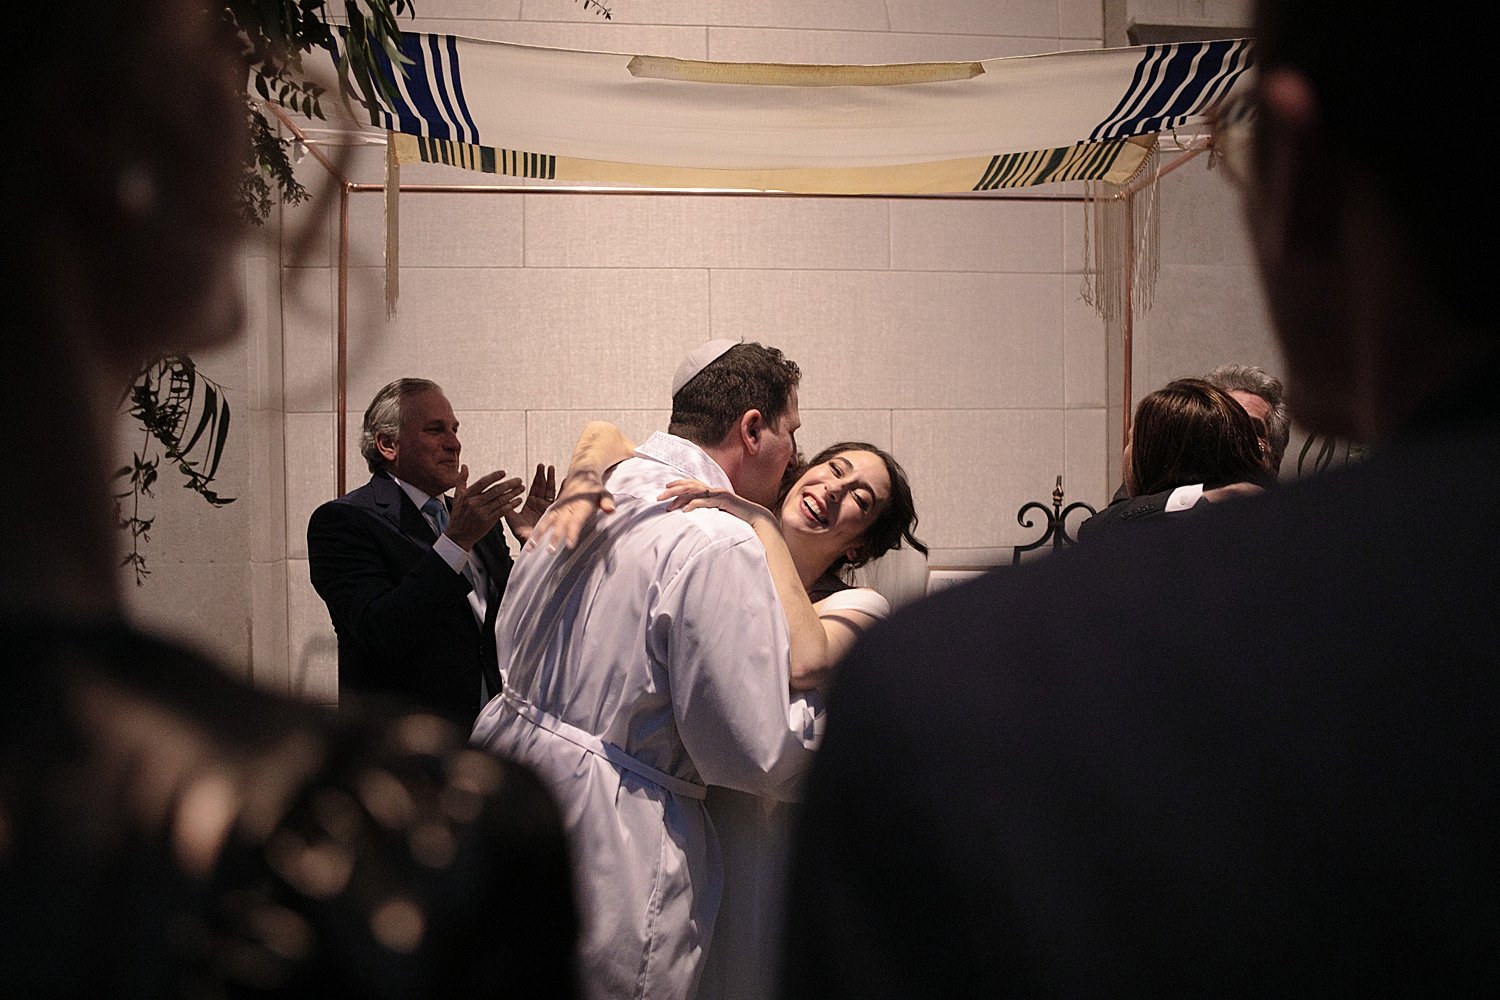 Chicago art musuem documentary wedding photographer  0057.jpg